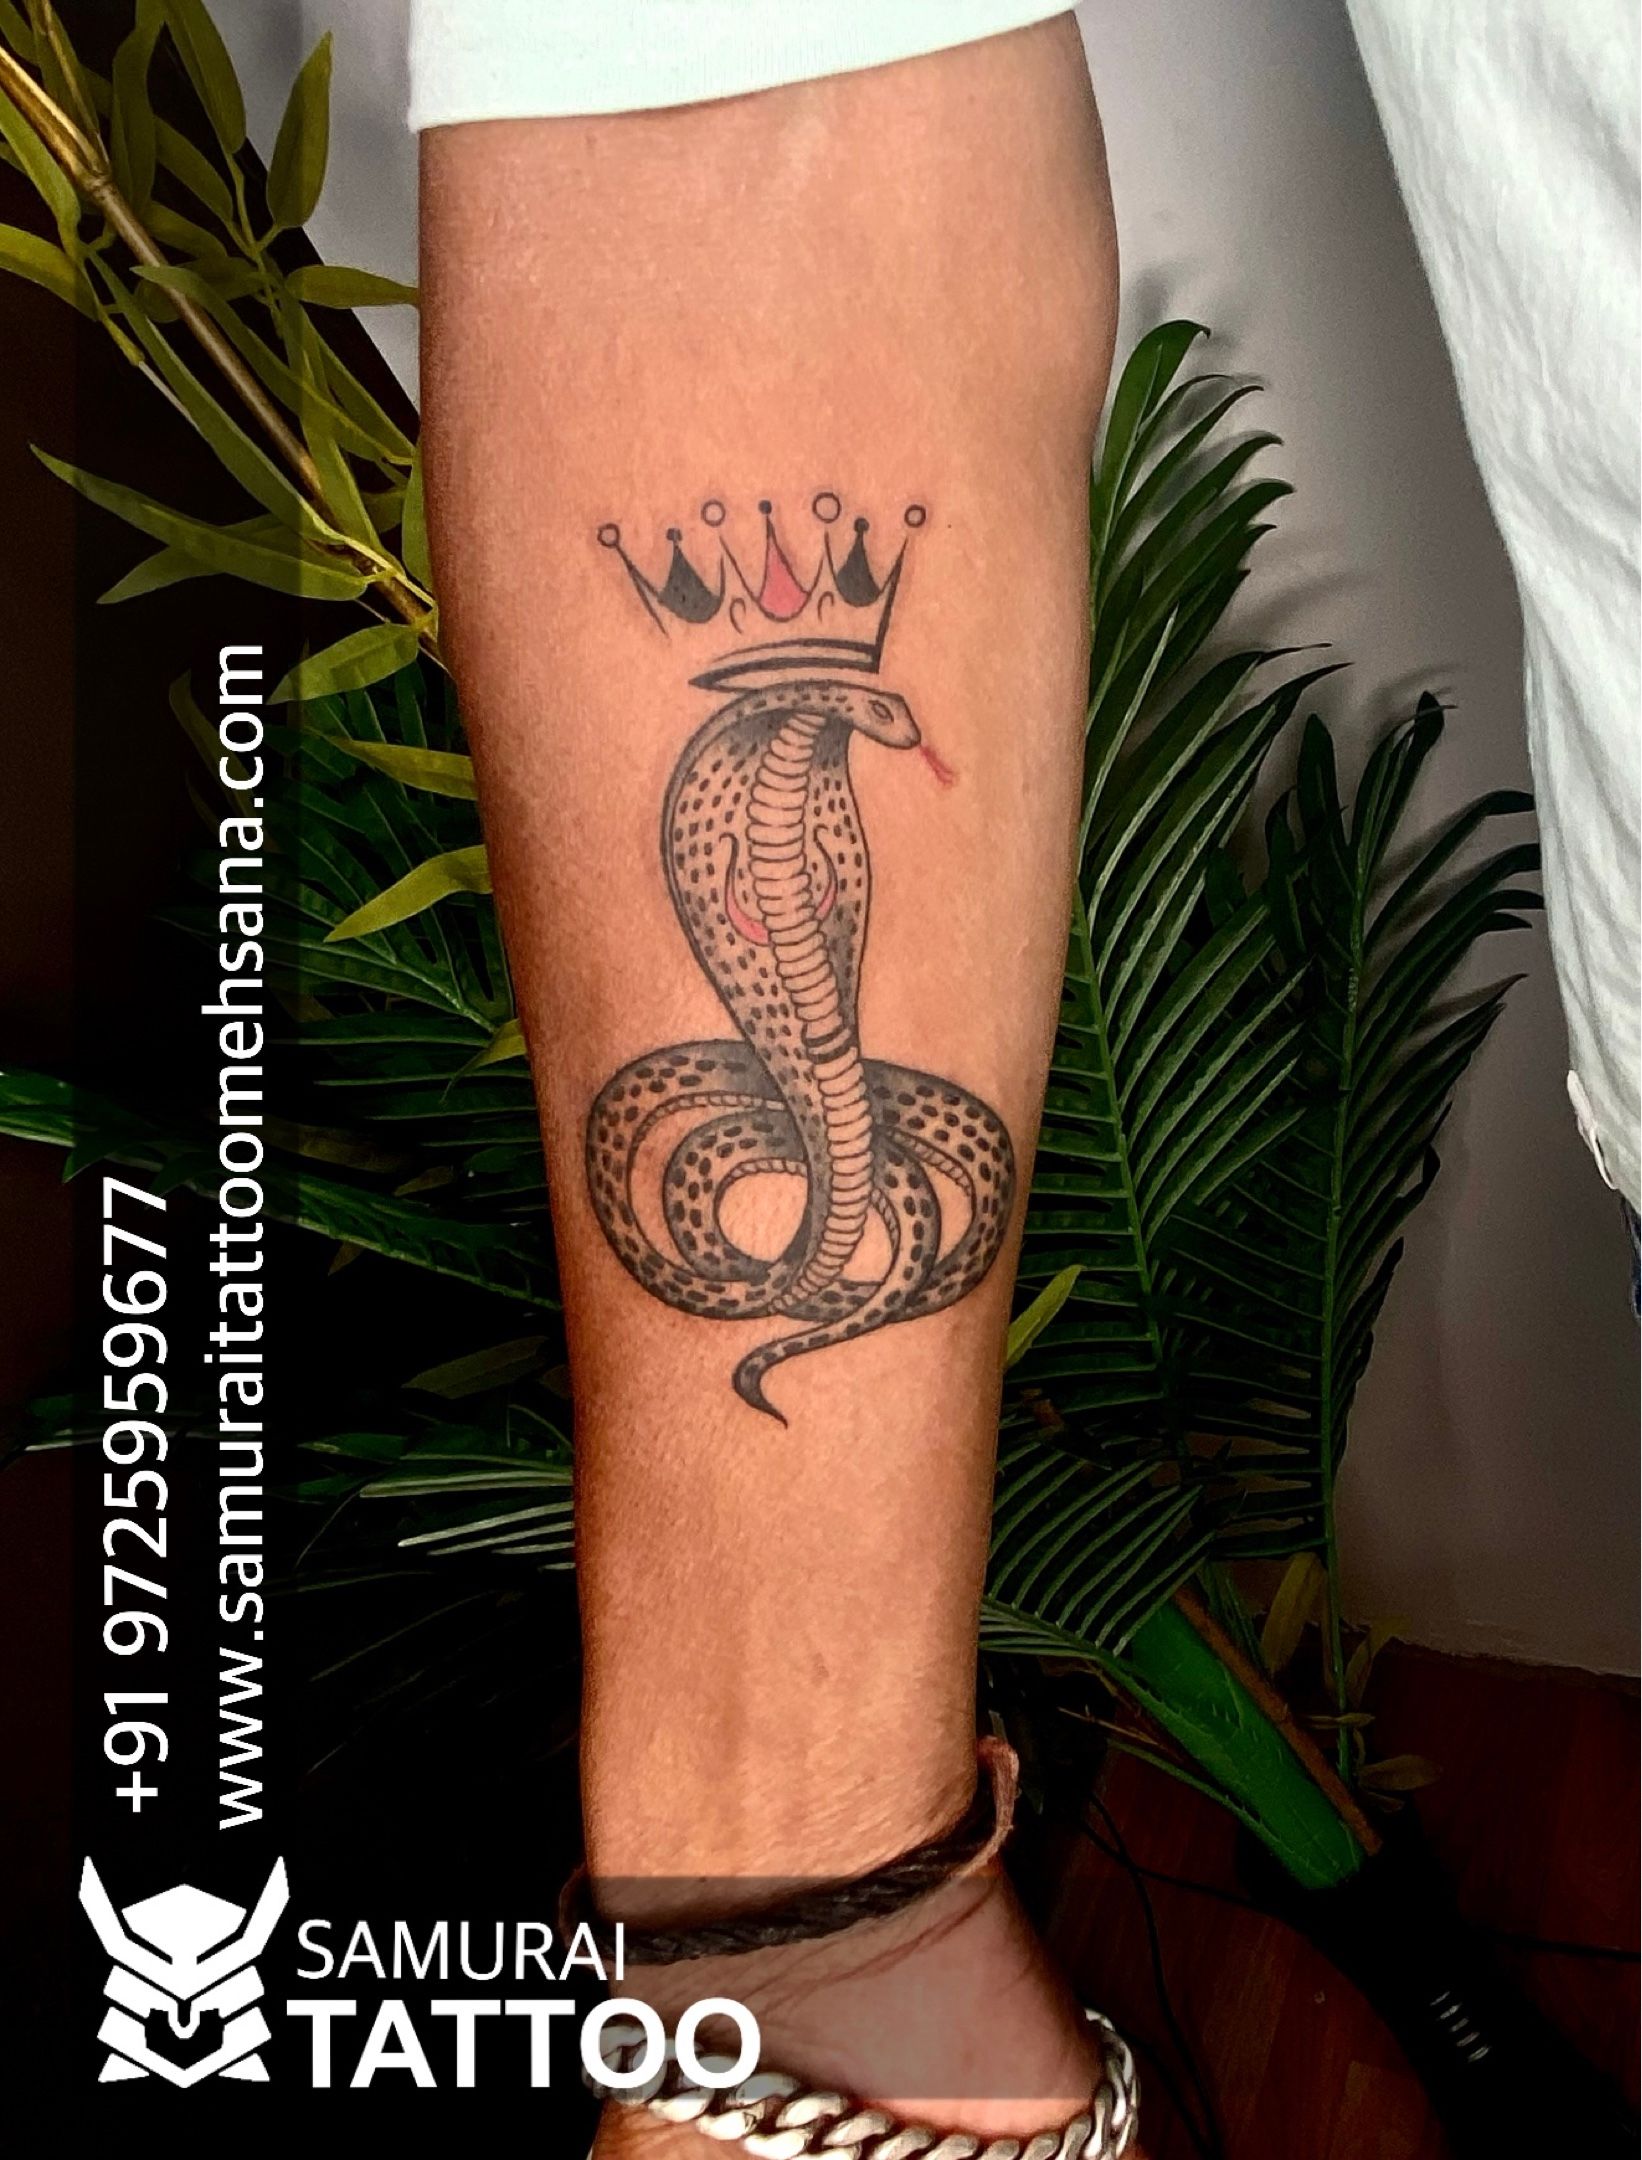 🐍Goga maharaj tattoo🐍 / snake tattoo / tattoos for men - YouTube